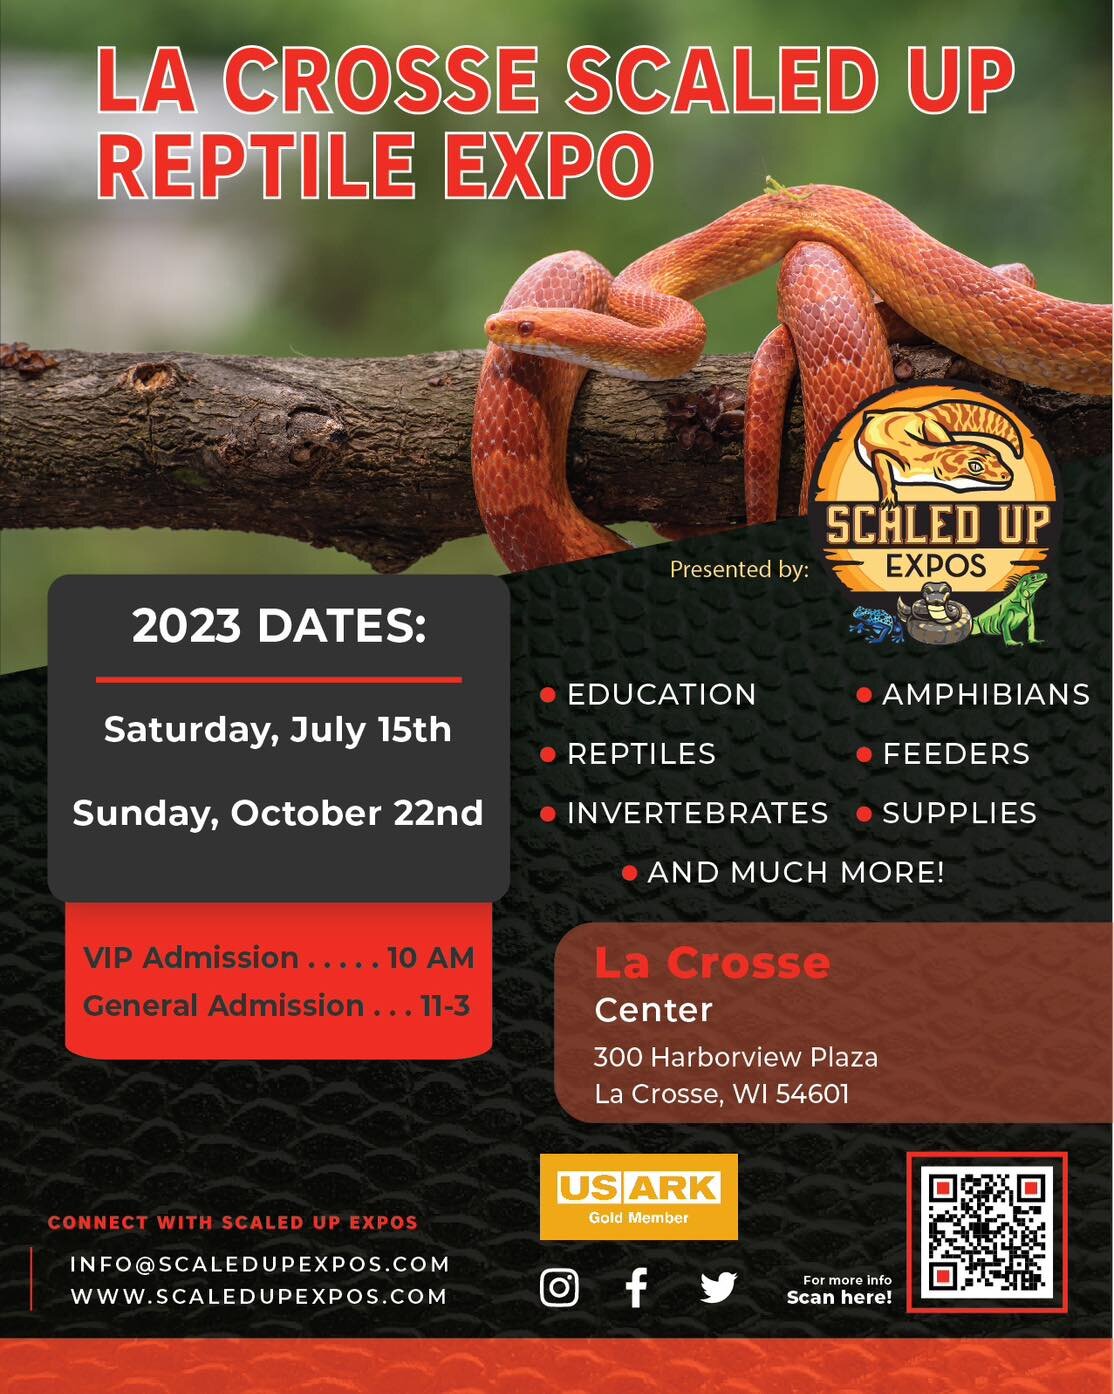 .
🎉LA CROSSE, HERE WE COME!! 🎉
.
.
.
#ScaledUpExpos #SURE2023 #ScaledUpReptileExpo #ScaledUp #GreenBay #Wausau #FondDuLac #LaCrosse #Wisconsin #WisconsinReptiles #ReptileExpo #ReptileShow #WisconsinReptileExpo #WisconsinReptileShow #ReptilesofInsta